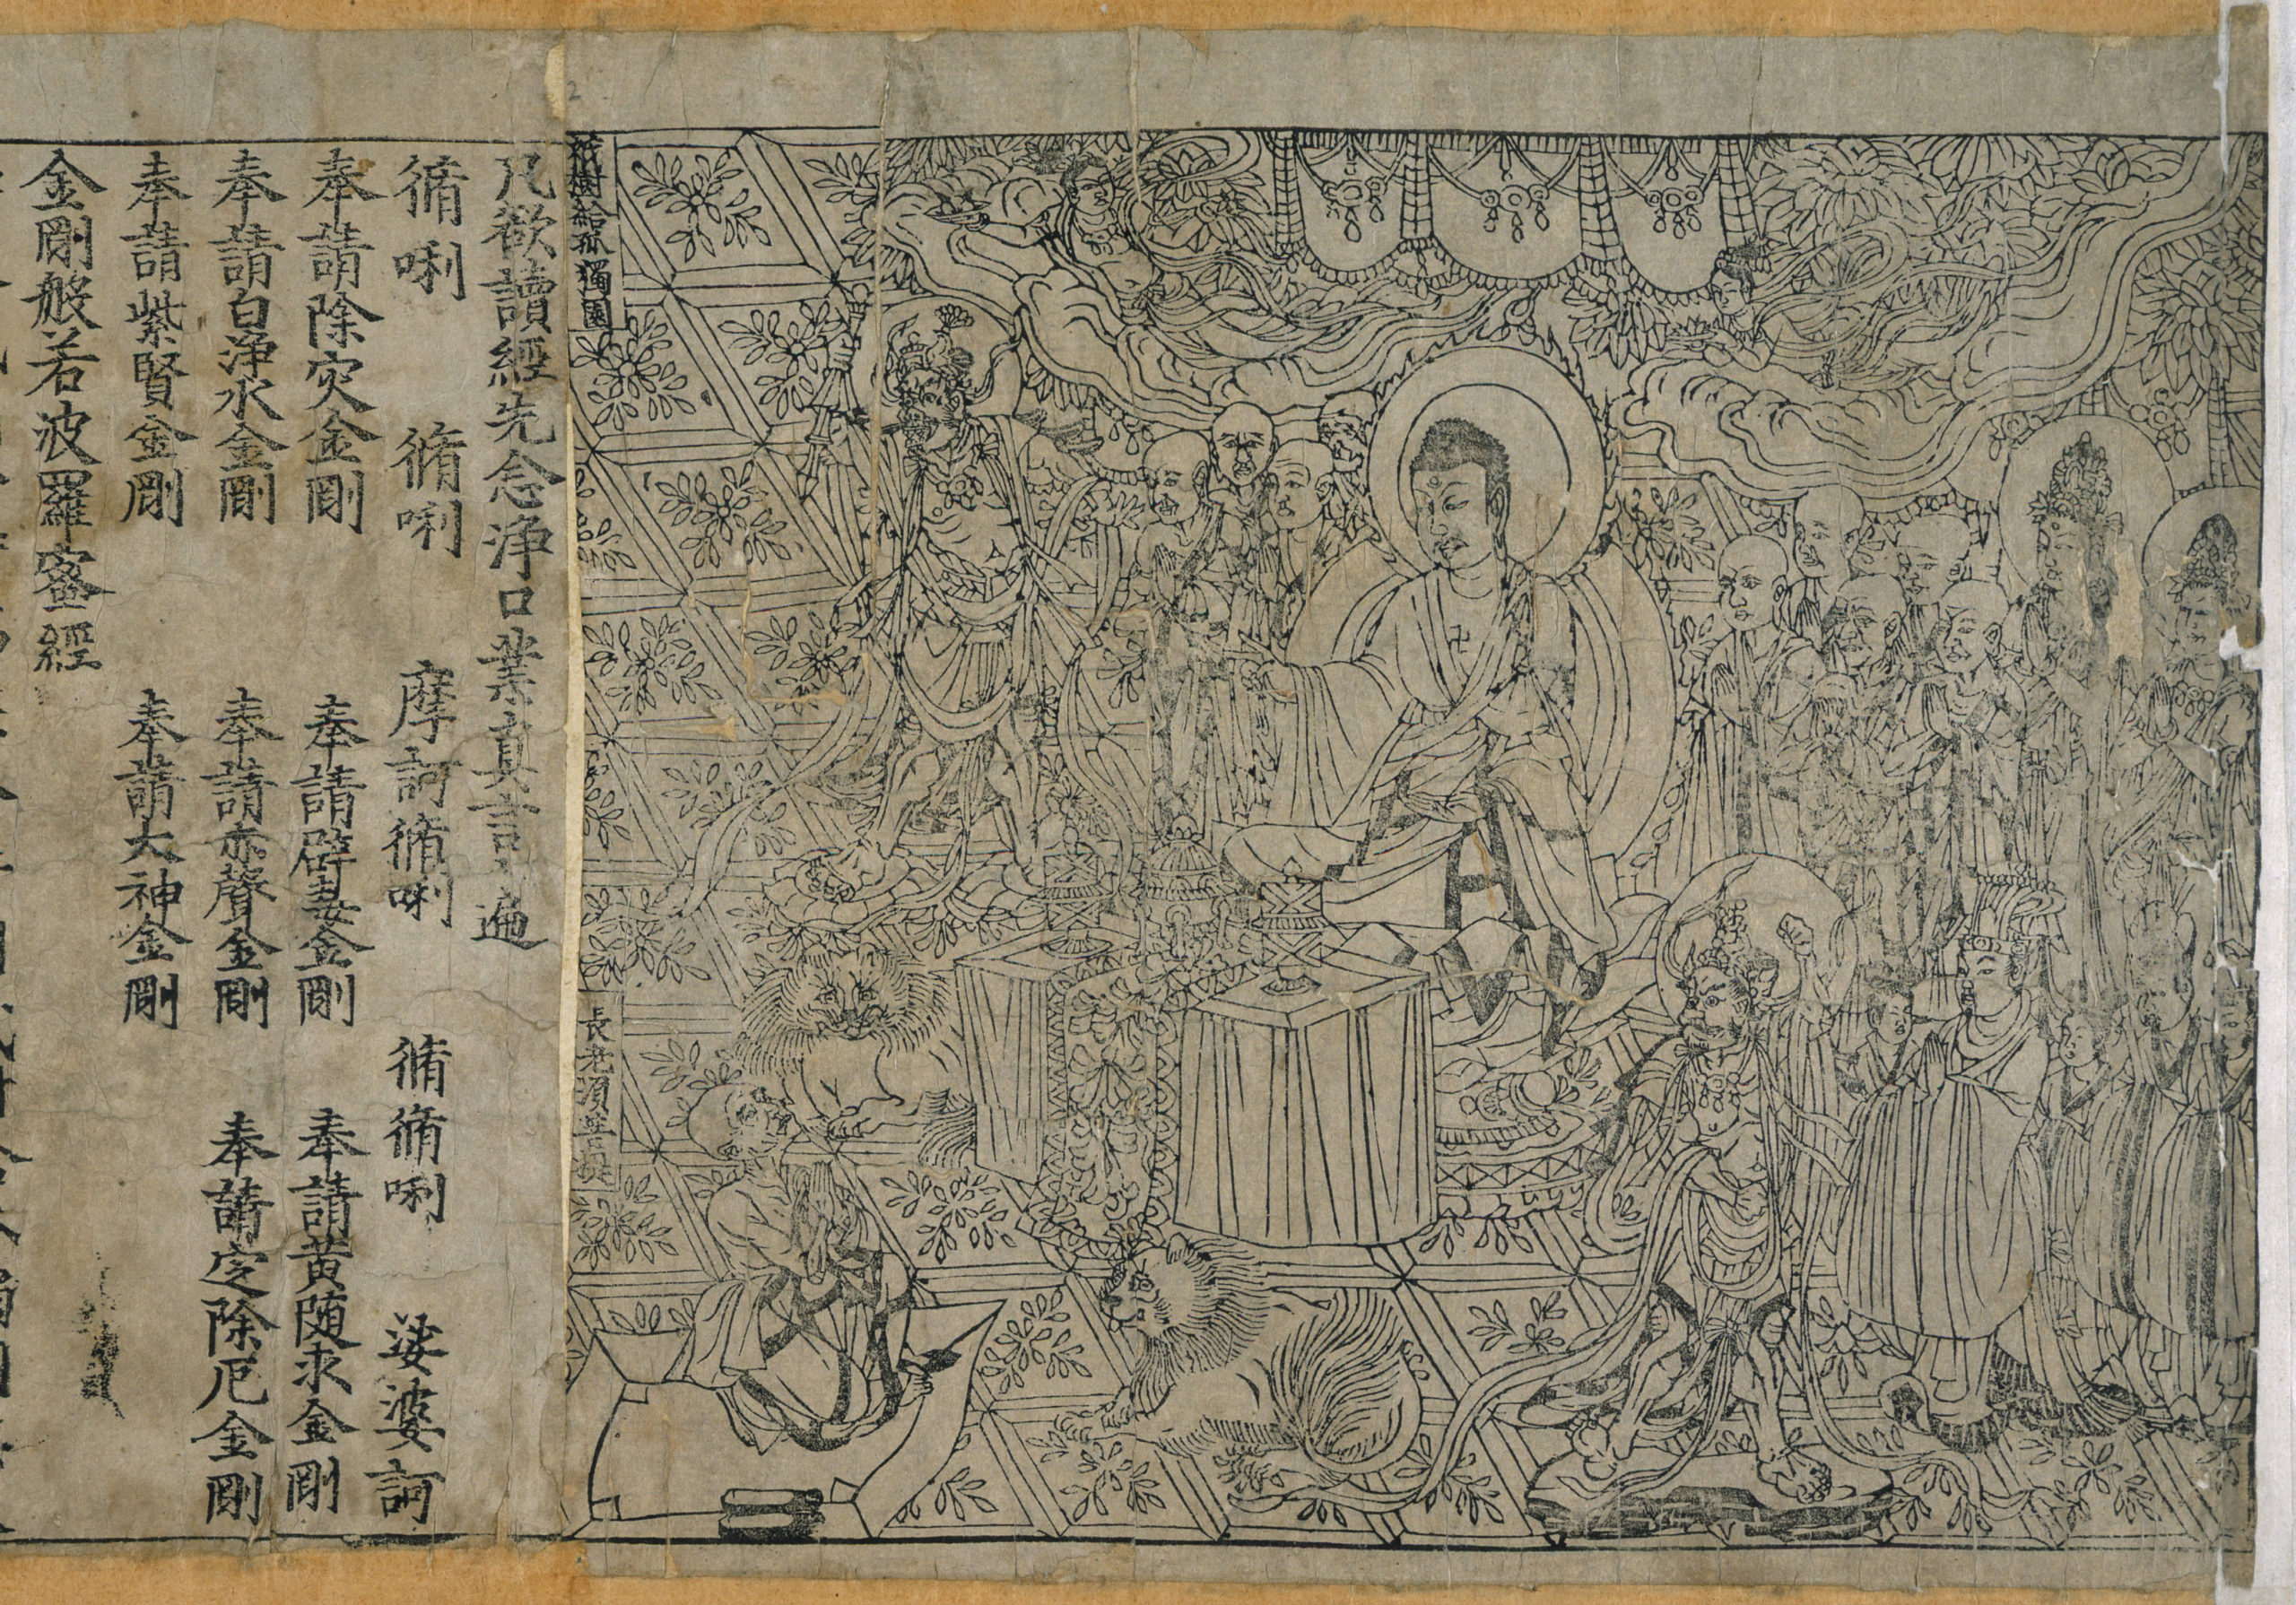 Diamond Sutra, 868, woodblock-printed scroll (British Library)